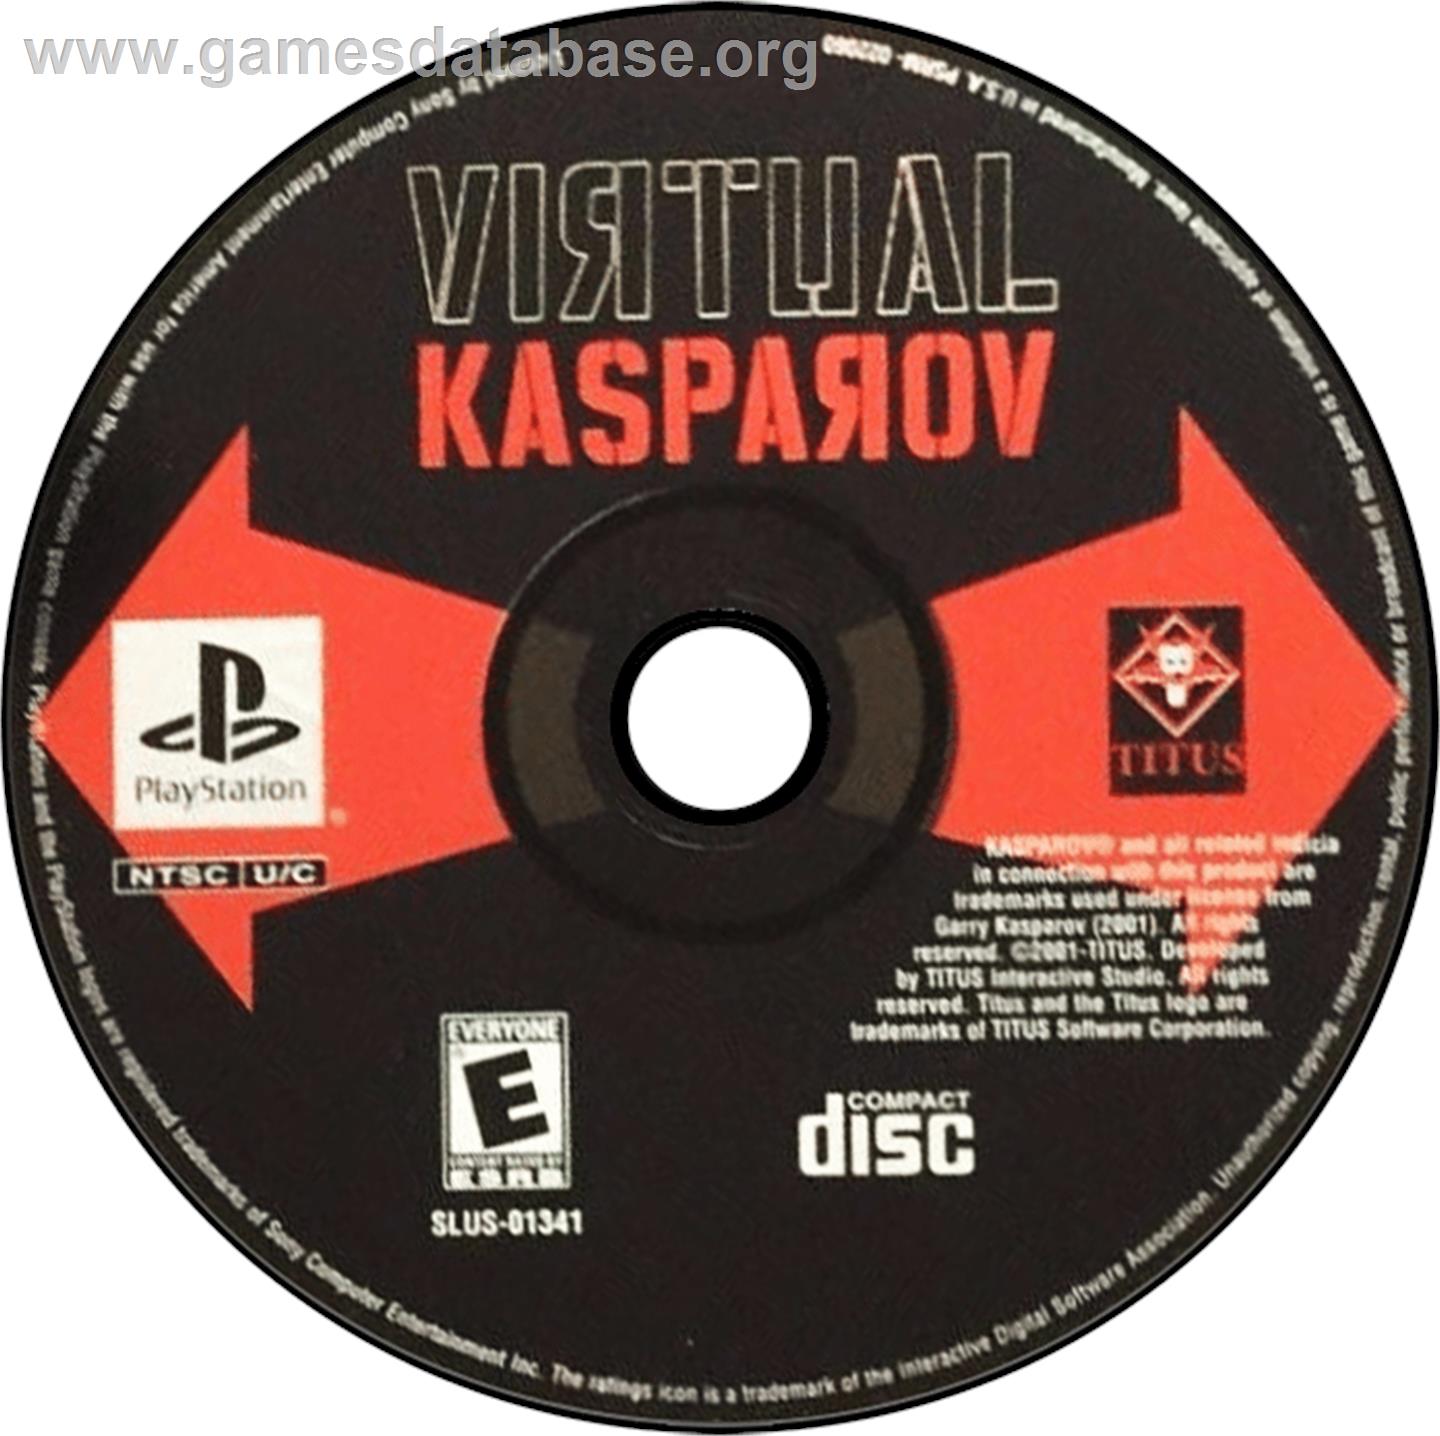 Virtual Kasparov - Sony Playstation - Artwork - Disc